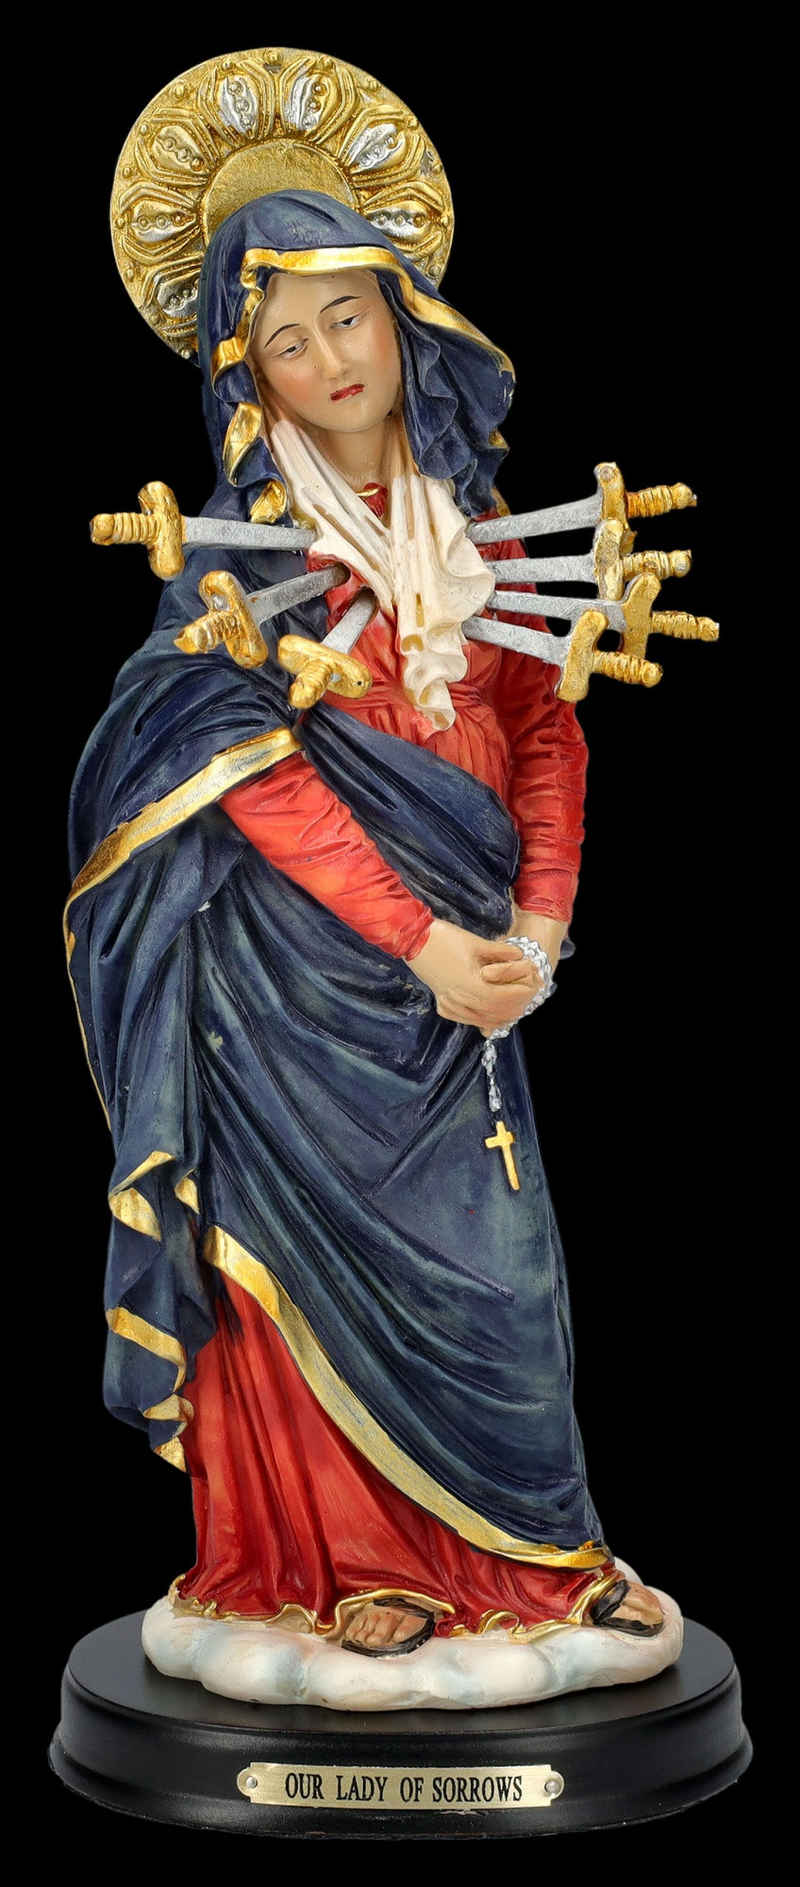 Figuren Shop GmbH Dekofigur Heiligenfigur - Sieben Schmerzen Madonna - heilige Dekofigur Maria Kir